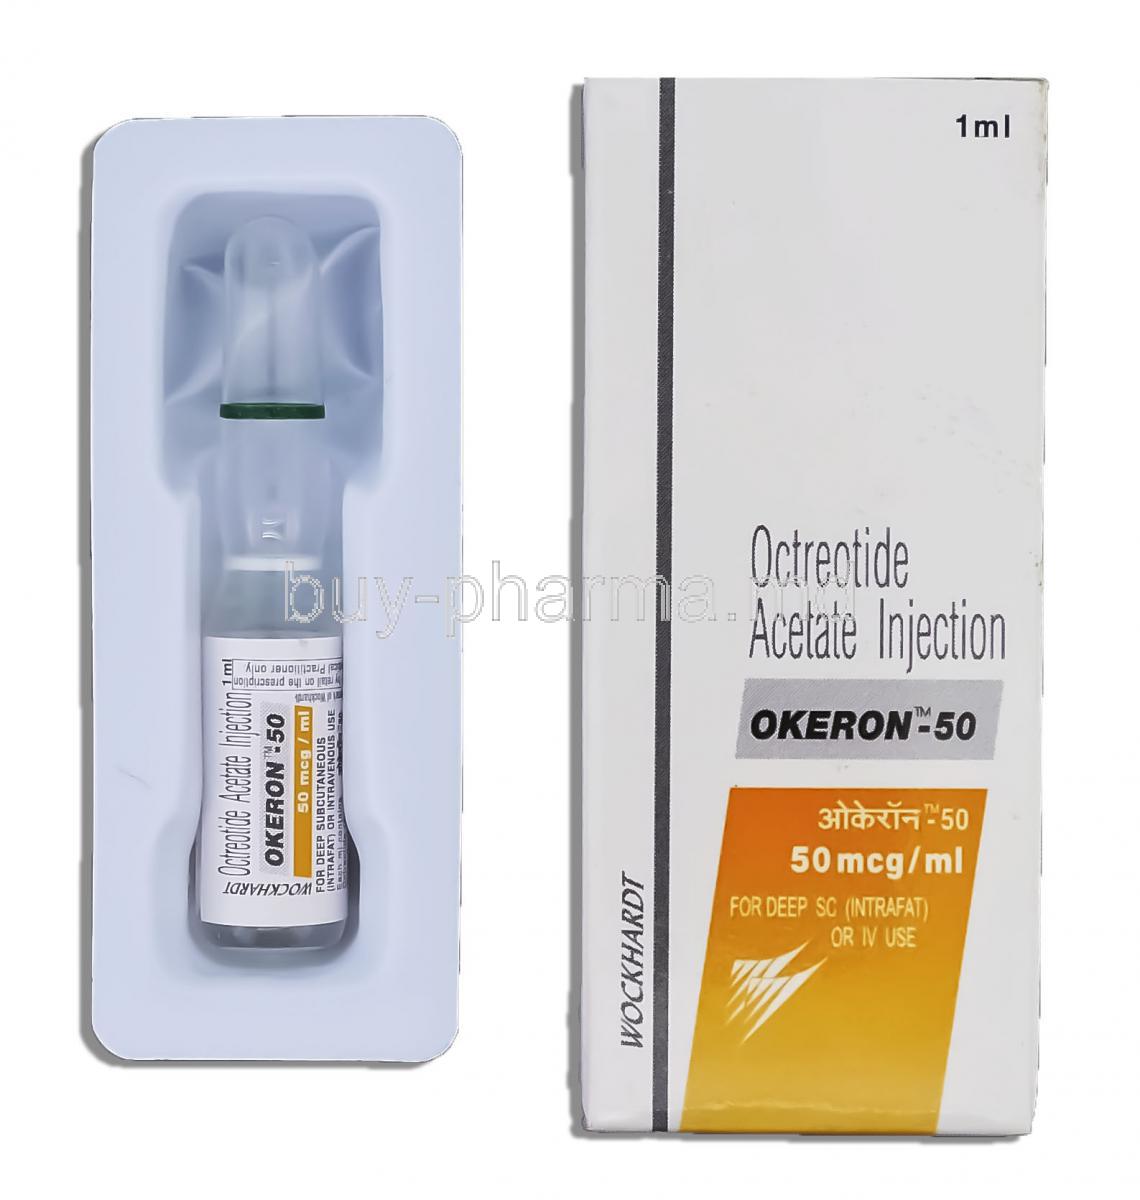 Okeran, Generic Sandostatin, Octreotide Acetate Injection